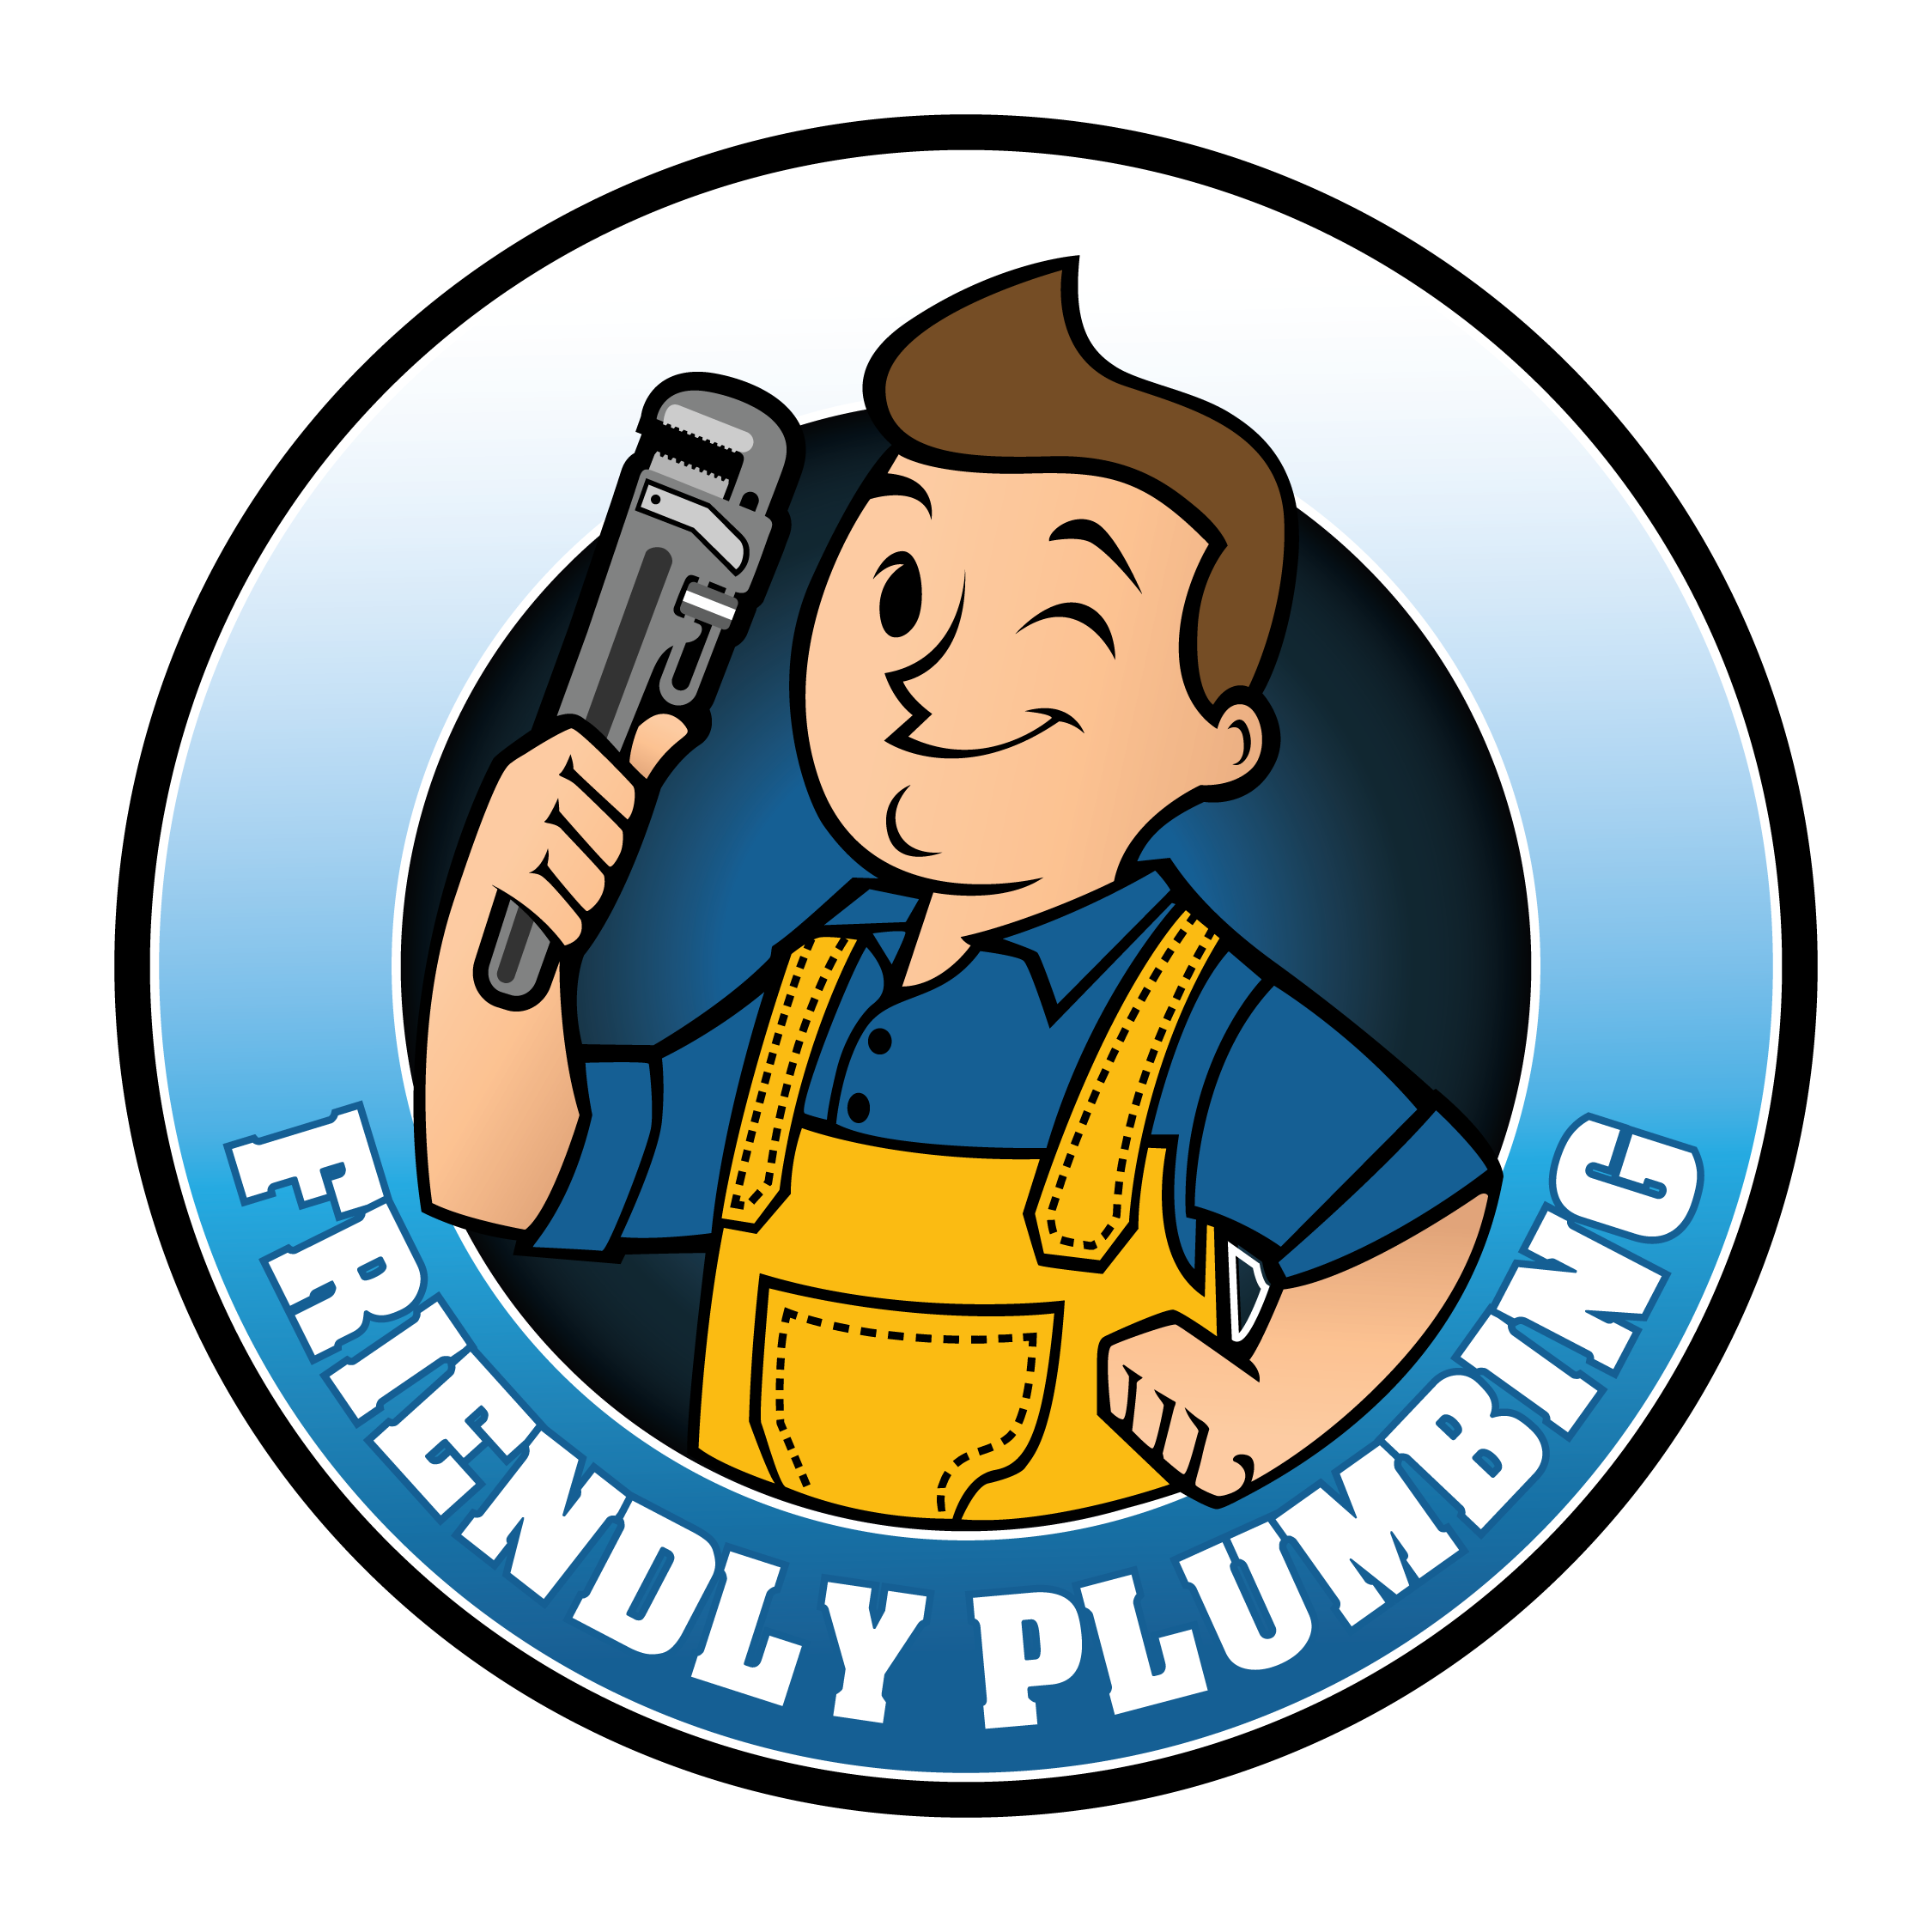 Friendly Plumbing Logo